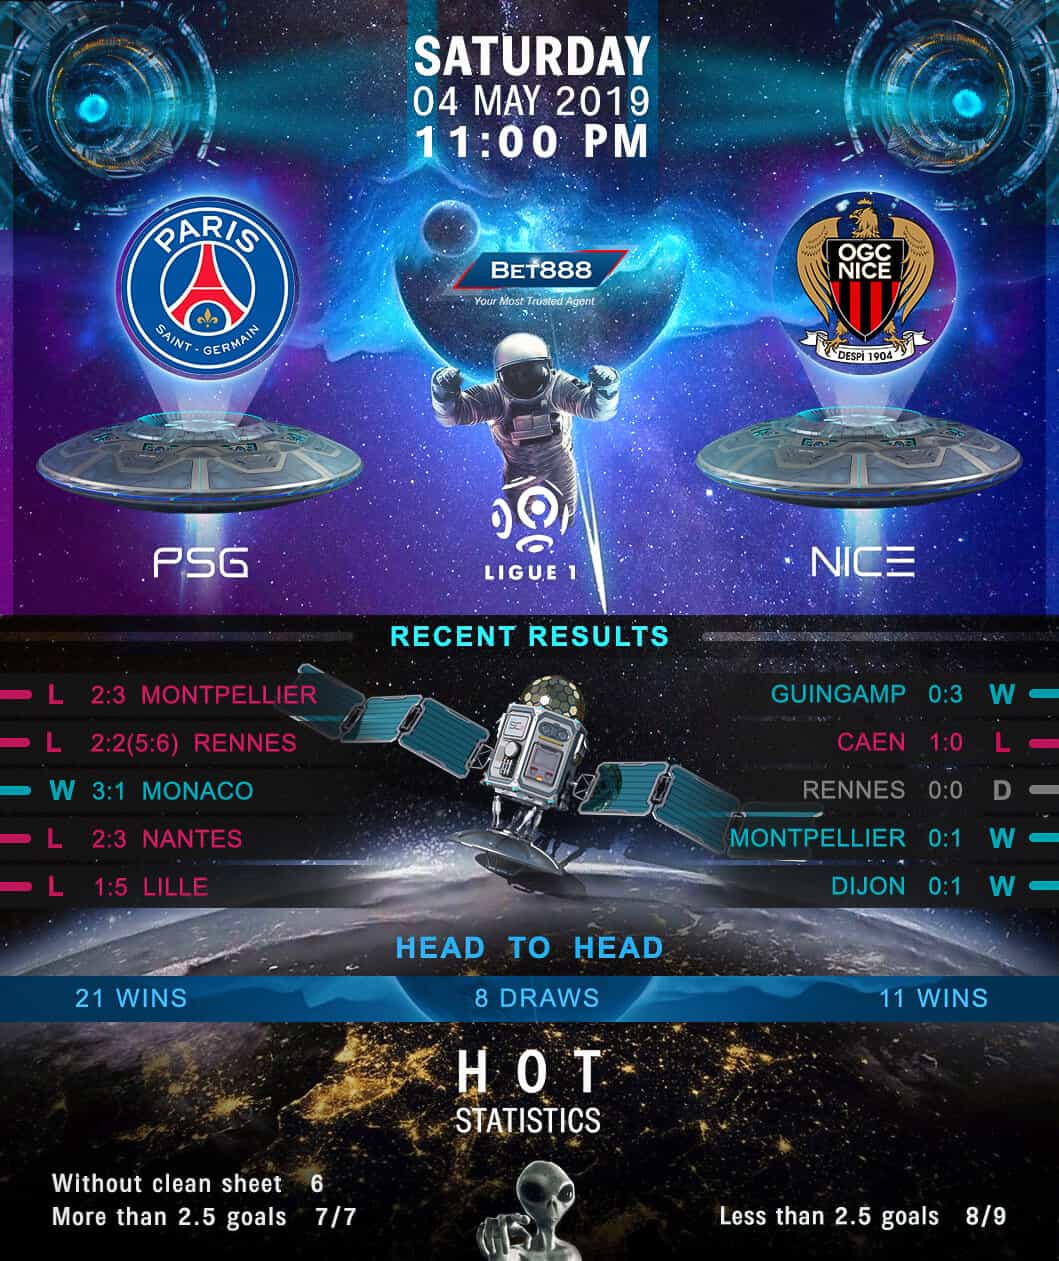 Paris Saint-Germain vs OGC Nice 04/05/19